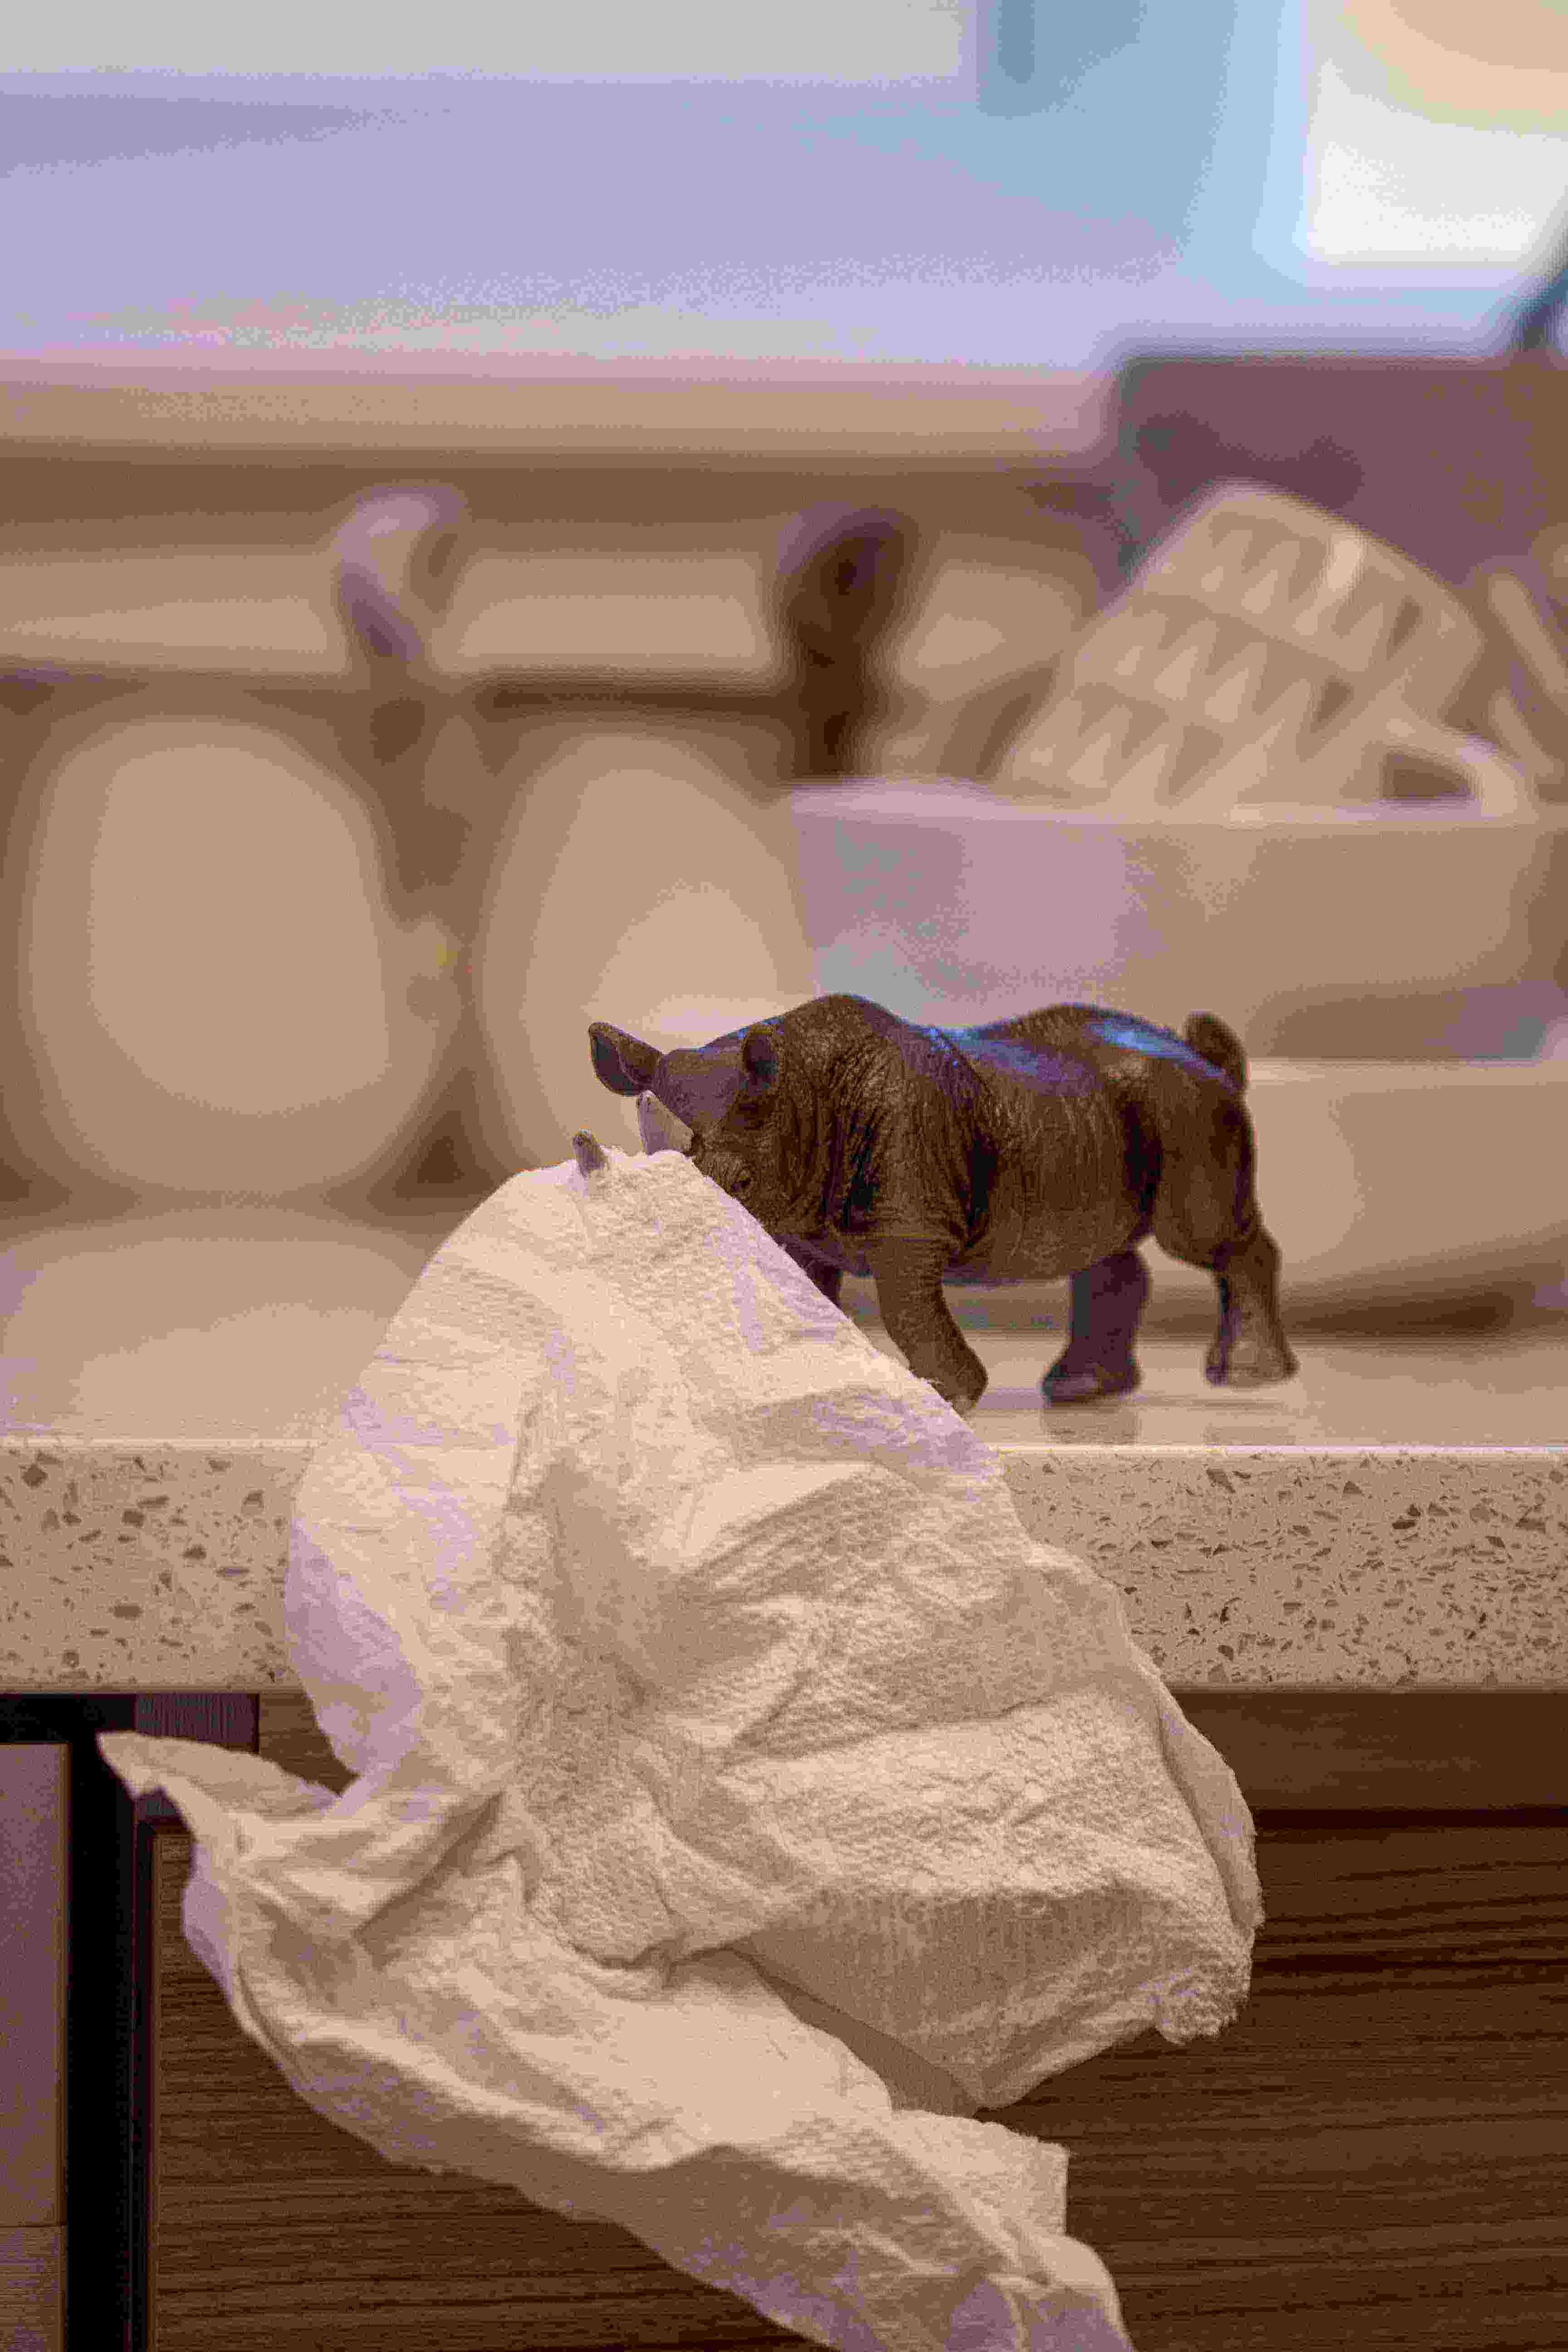 Toy rhino piercing through a paper towel